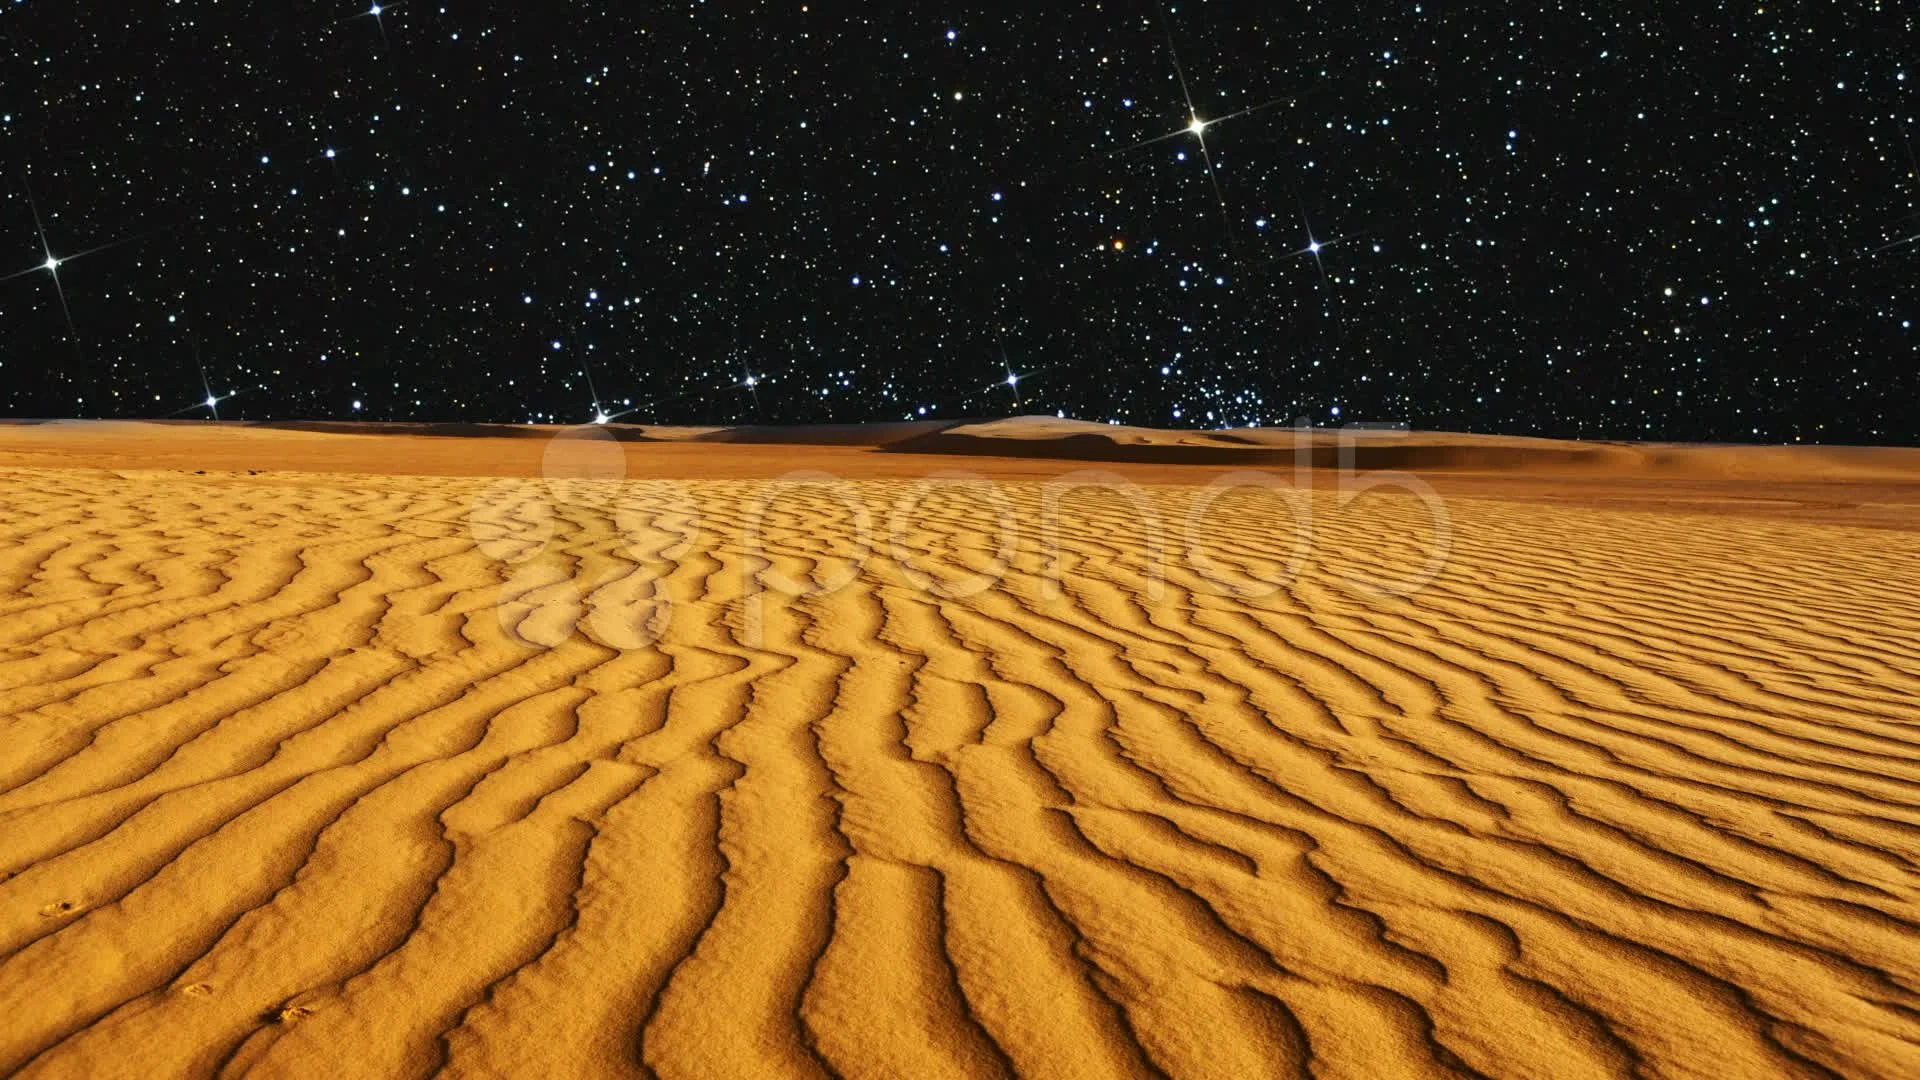 Sahara desert at night